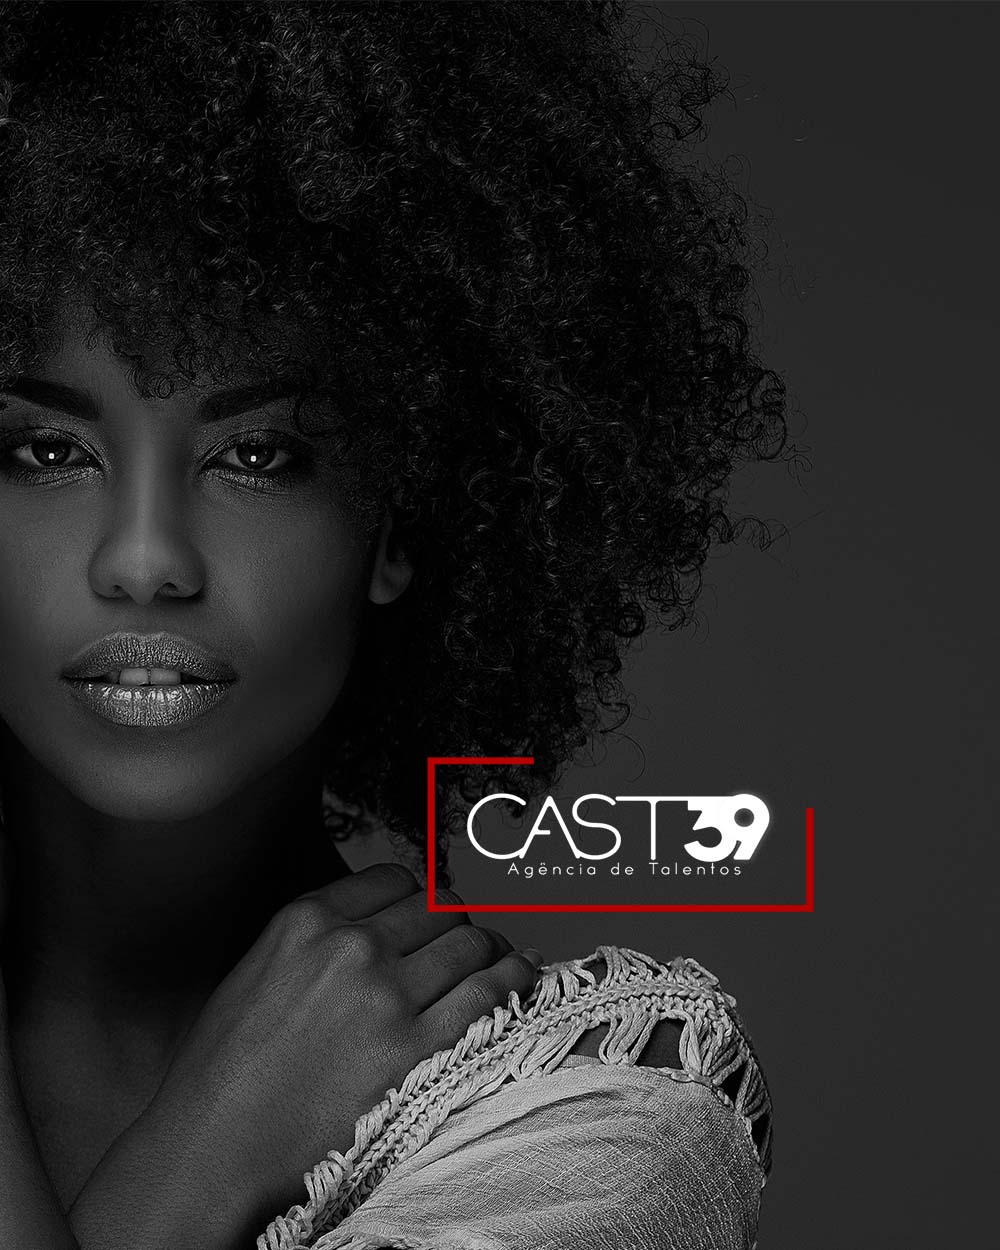 Cast39 Agency